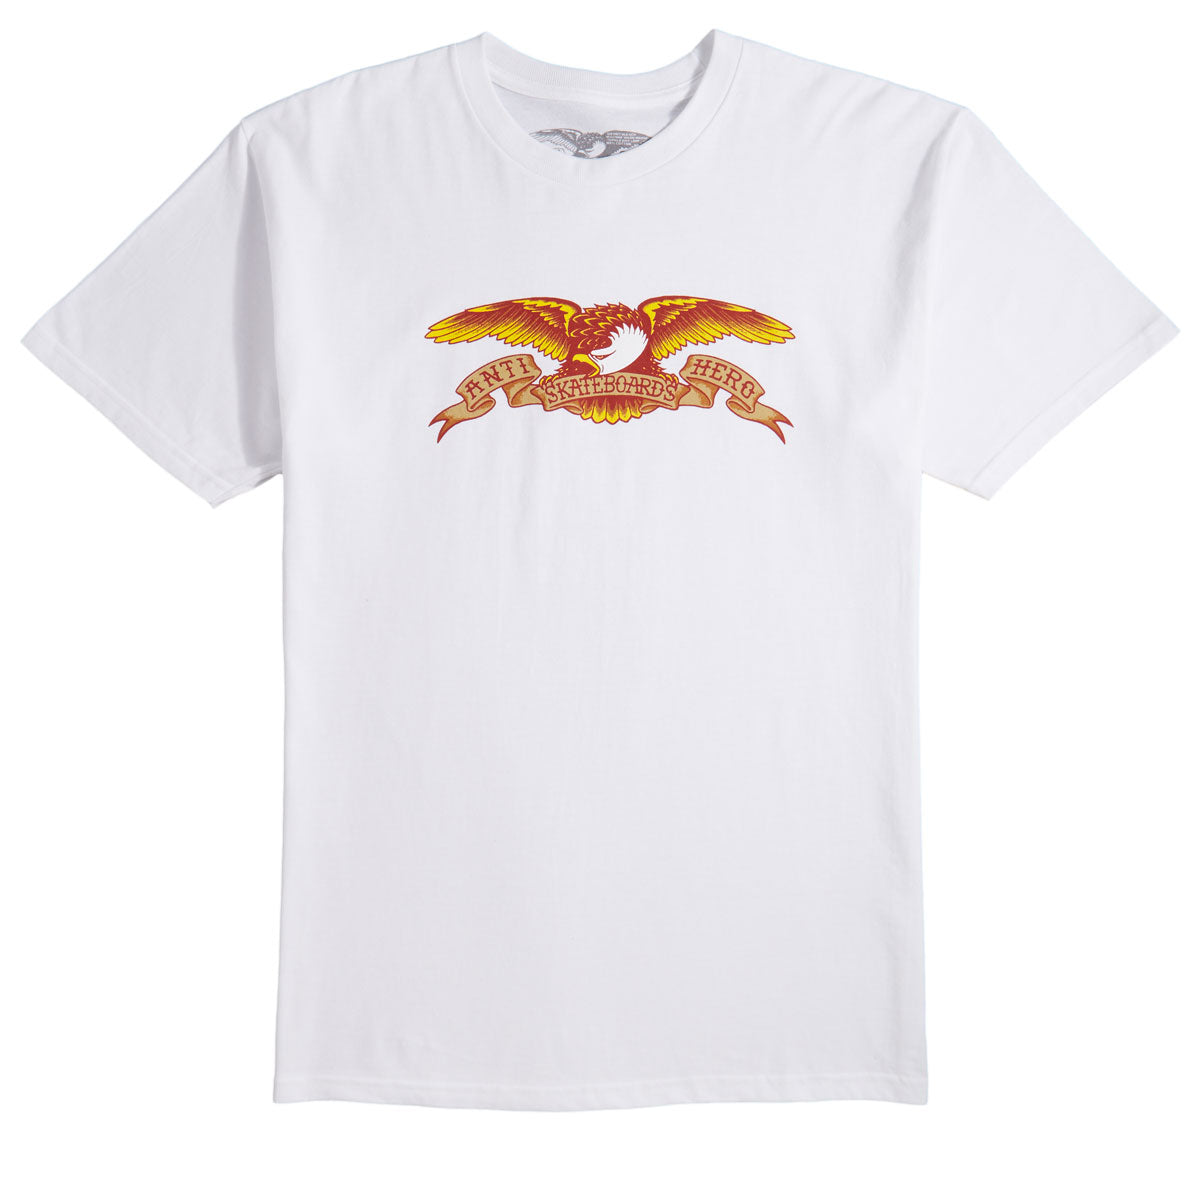 Anti-Hero Eagle T-Shirt - White image 1